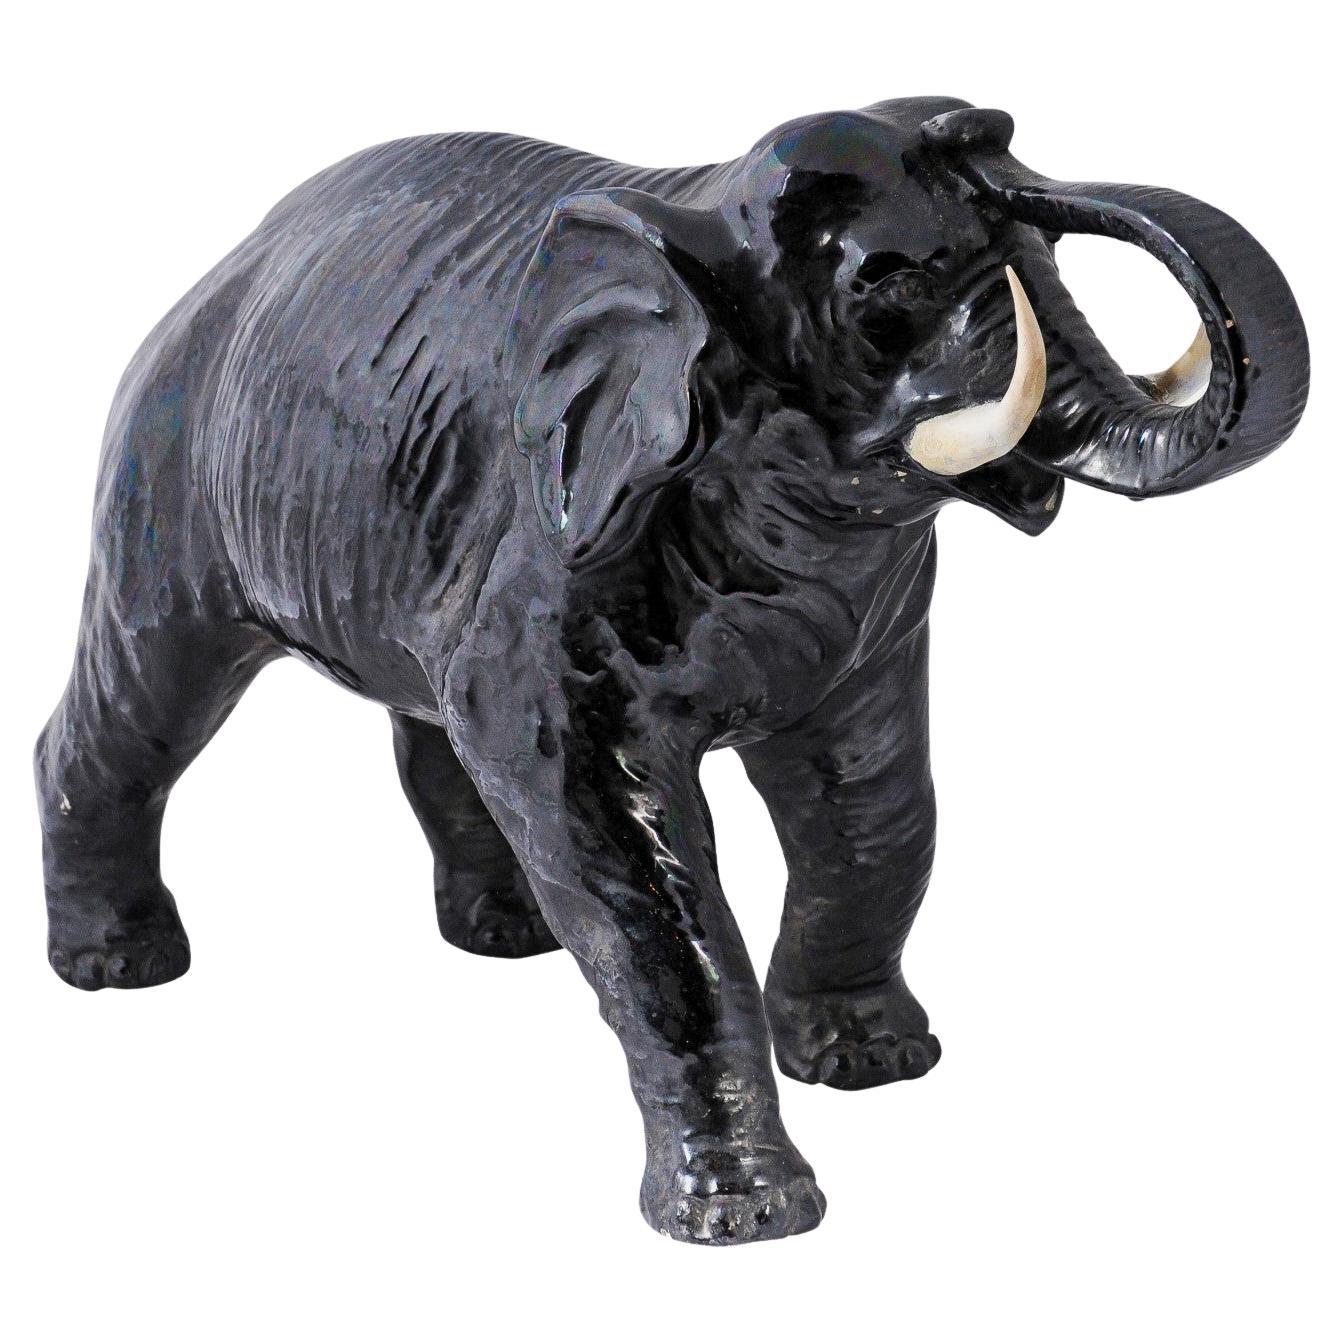 Vintage Italian Black Glazed Ceramic Sculpture of a Walking Elephant, Trunk Up For Sale